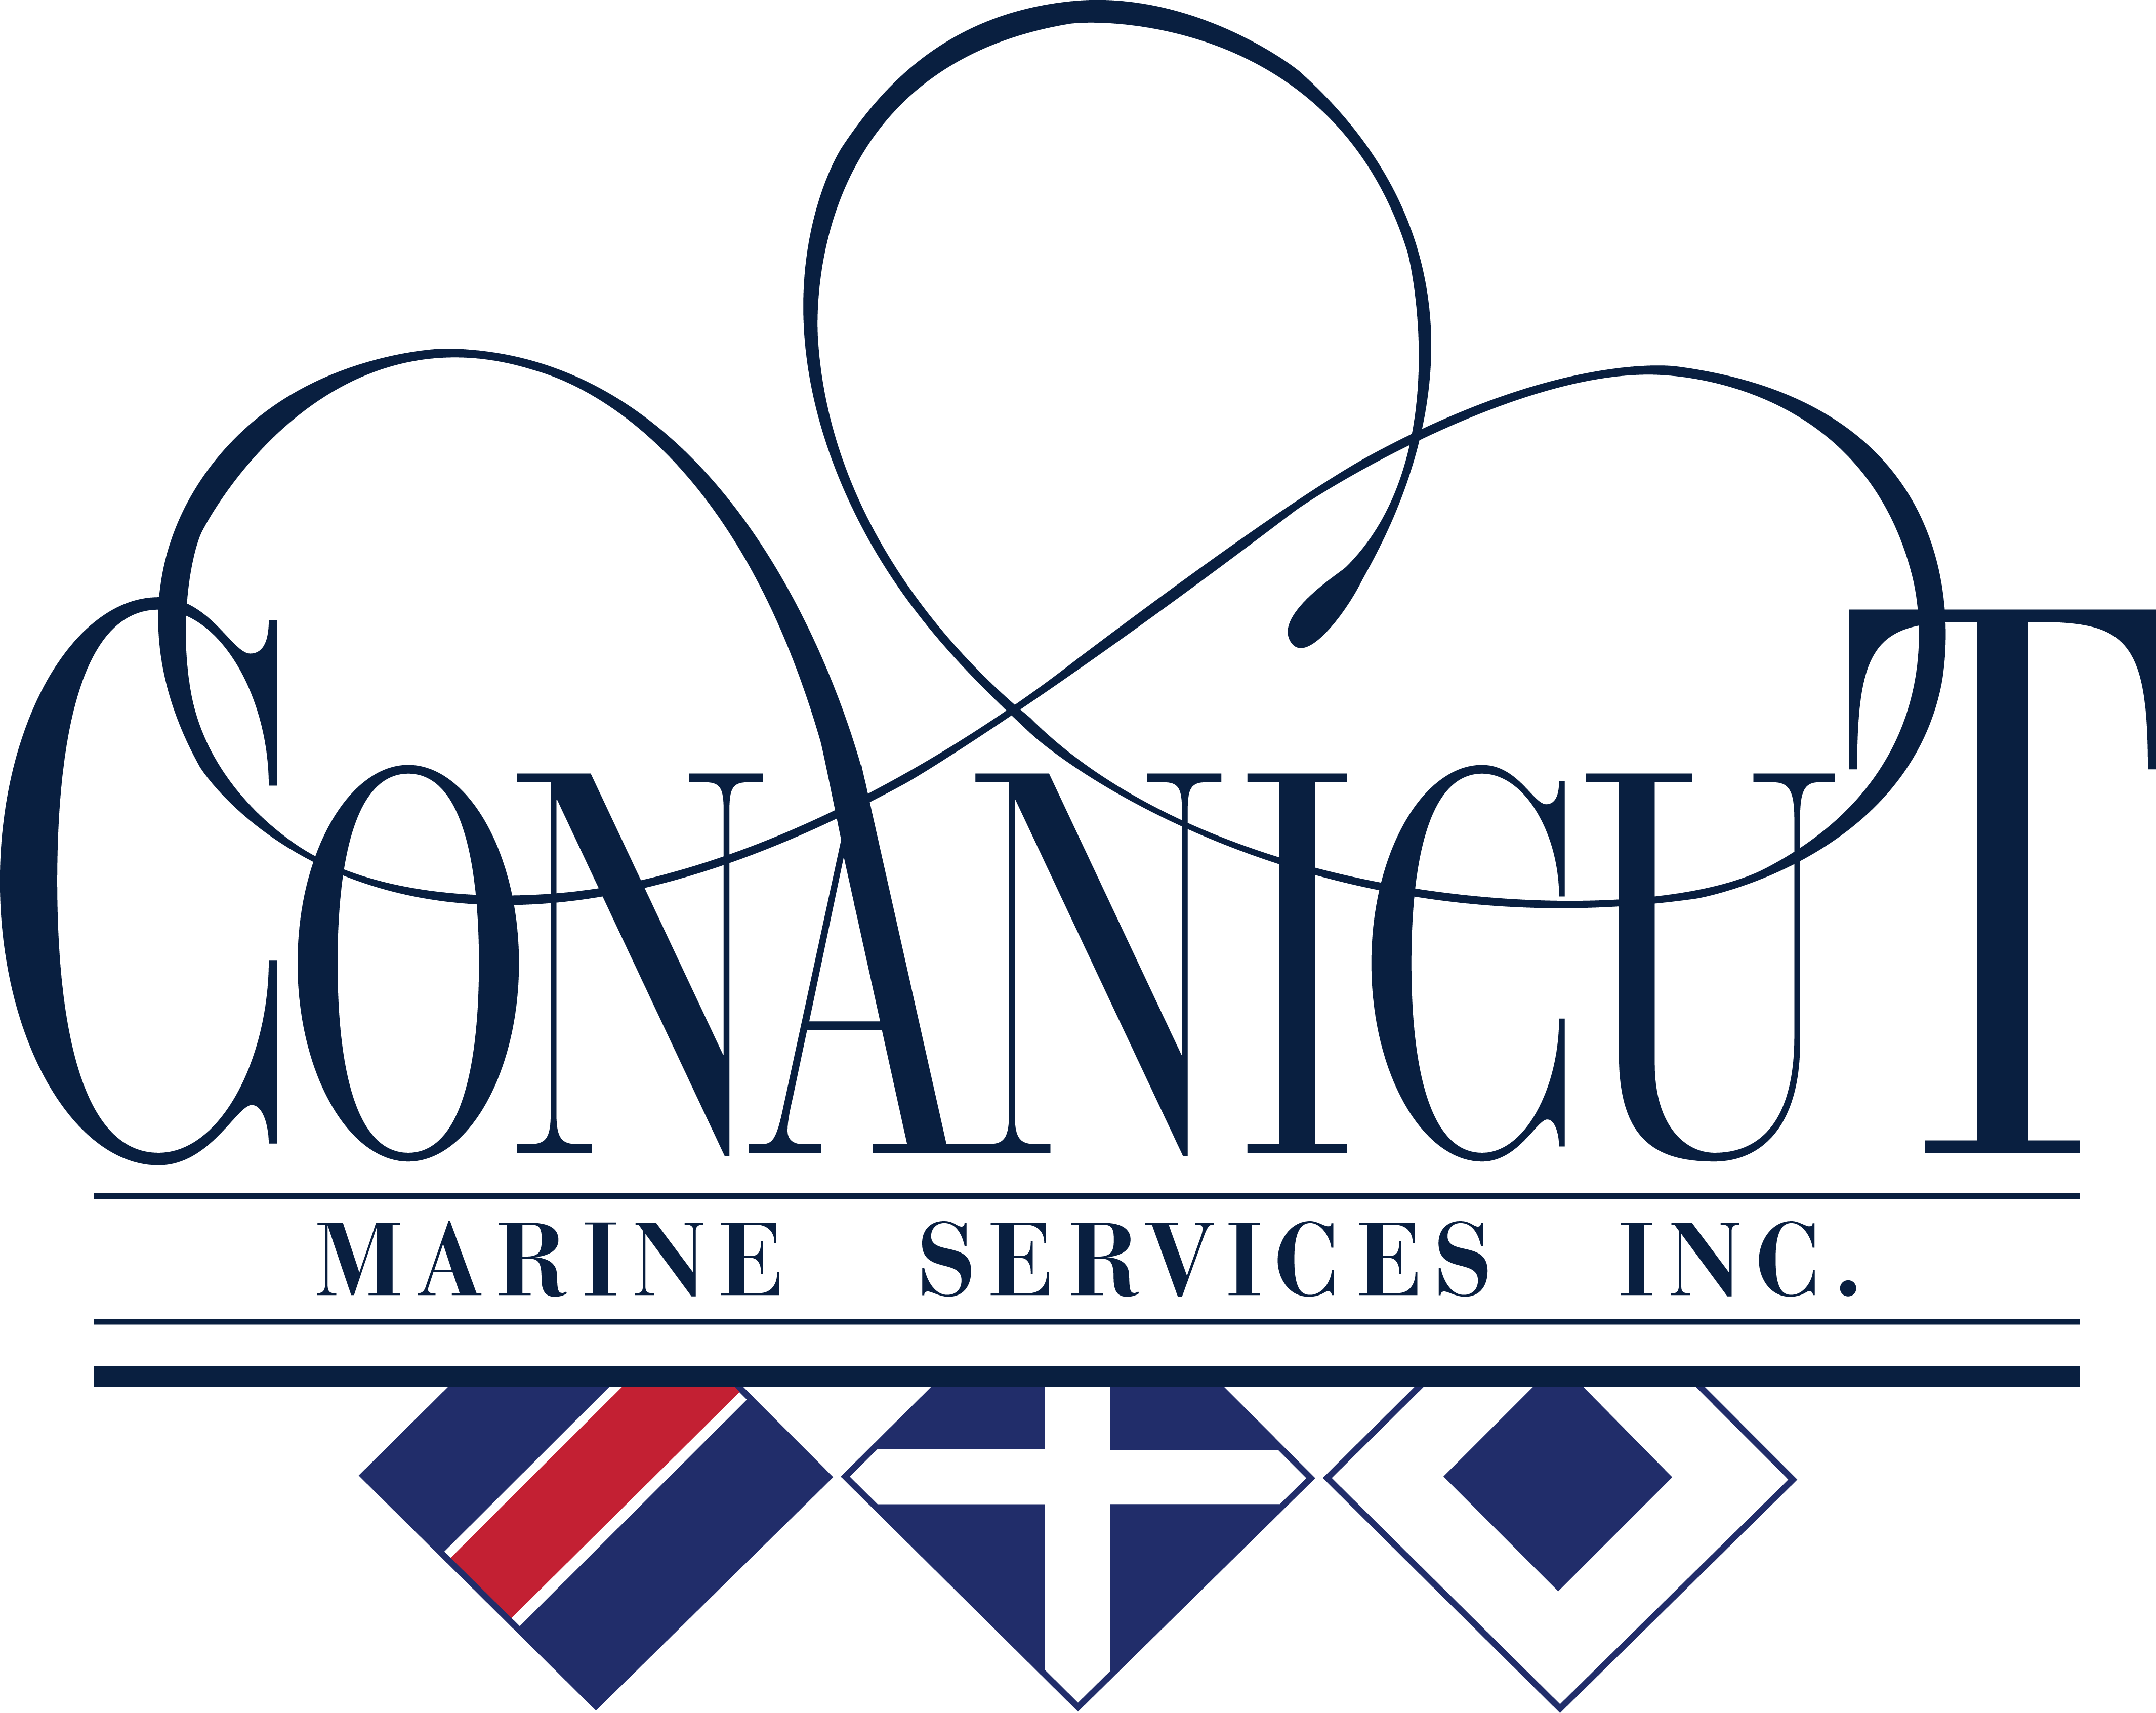 Conanicut Marine Services